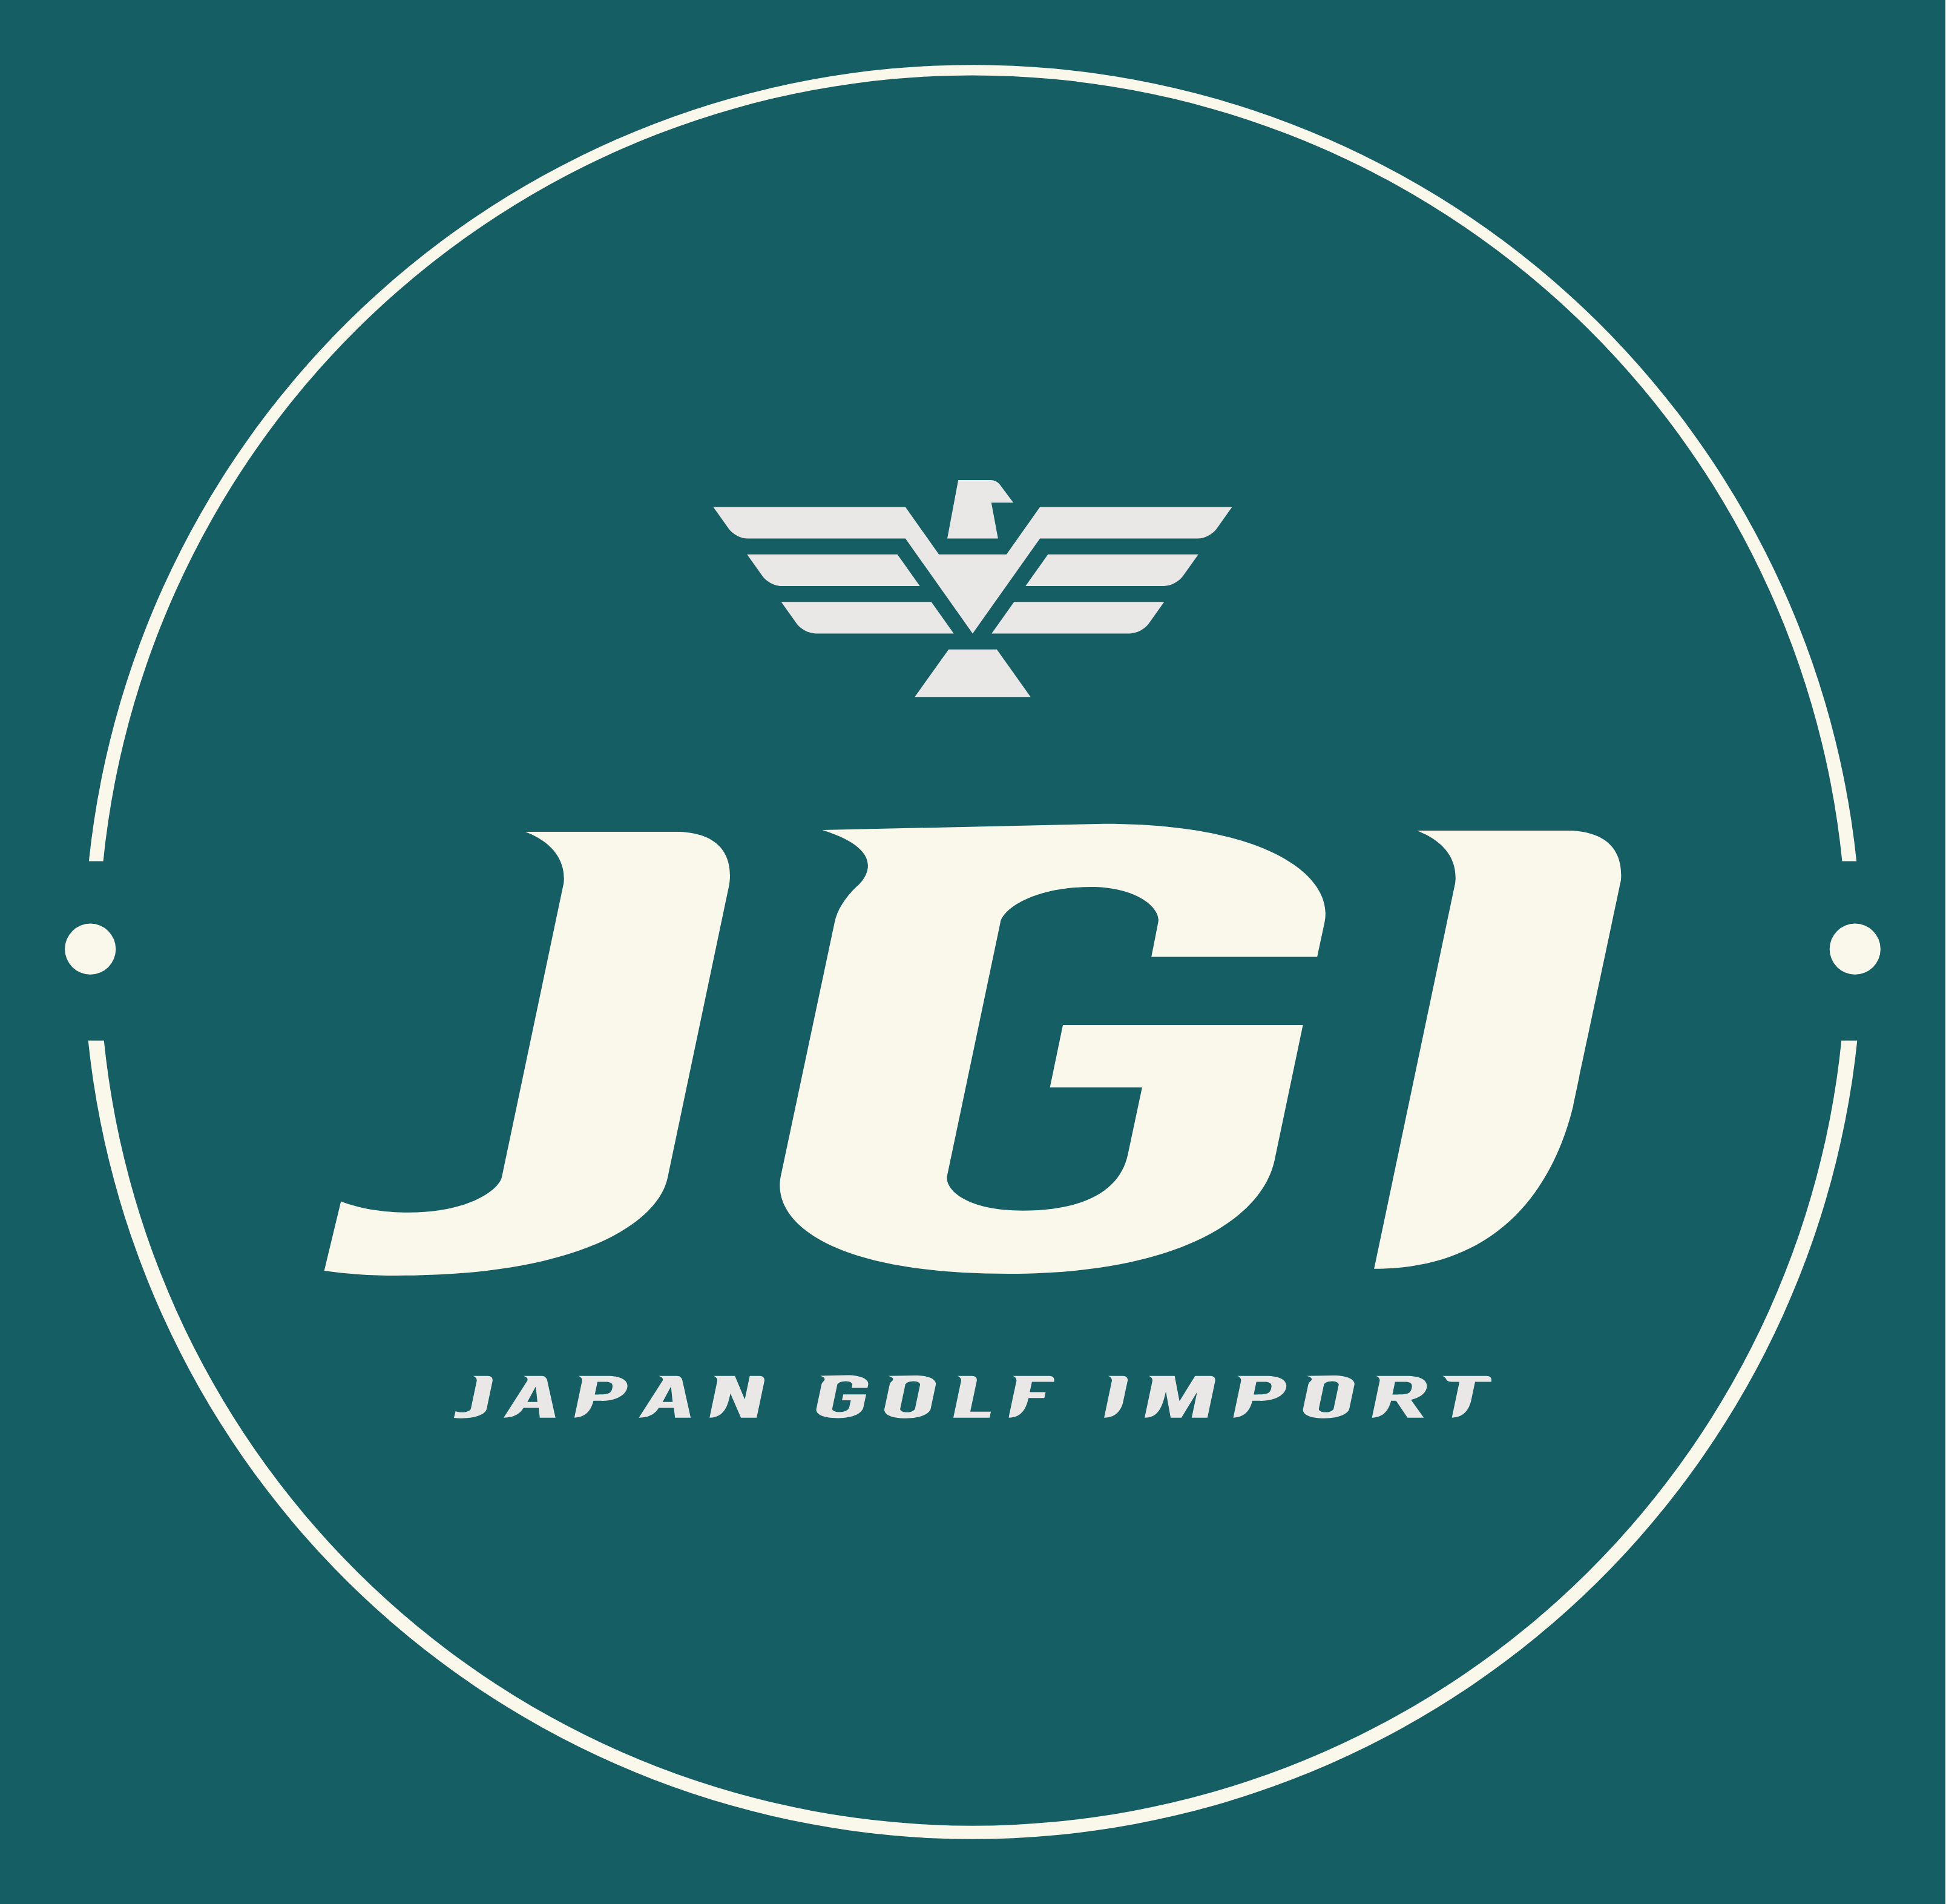 Japan Golf Import